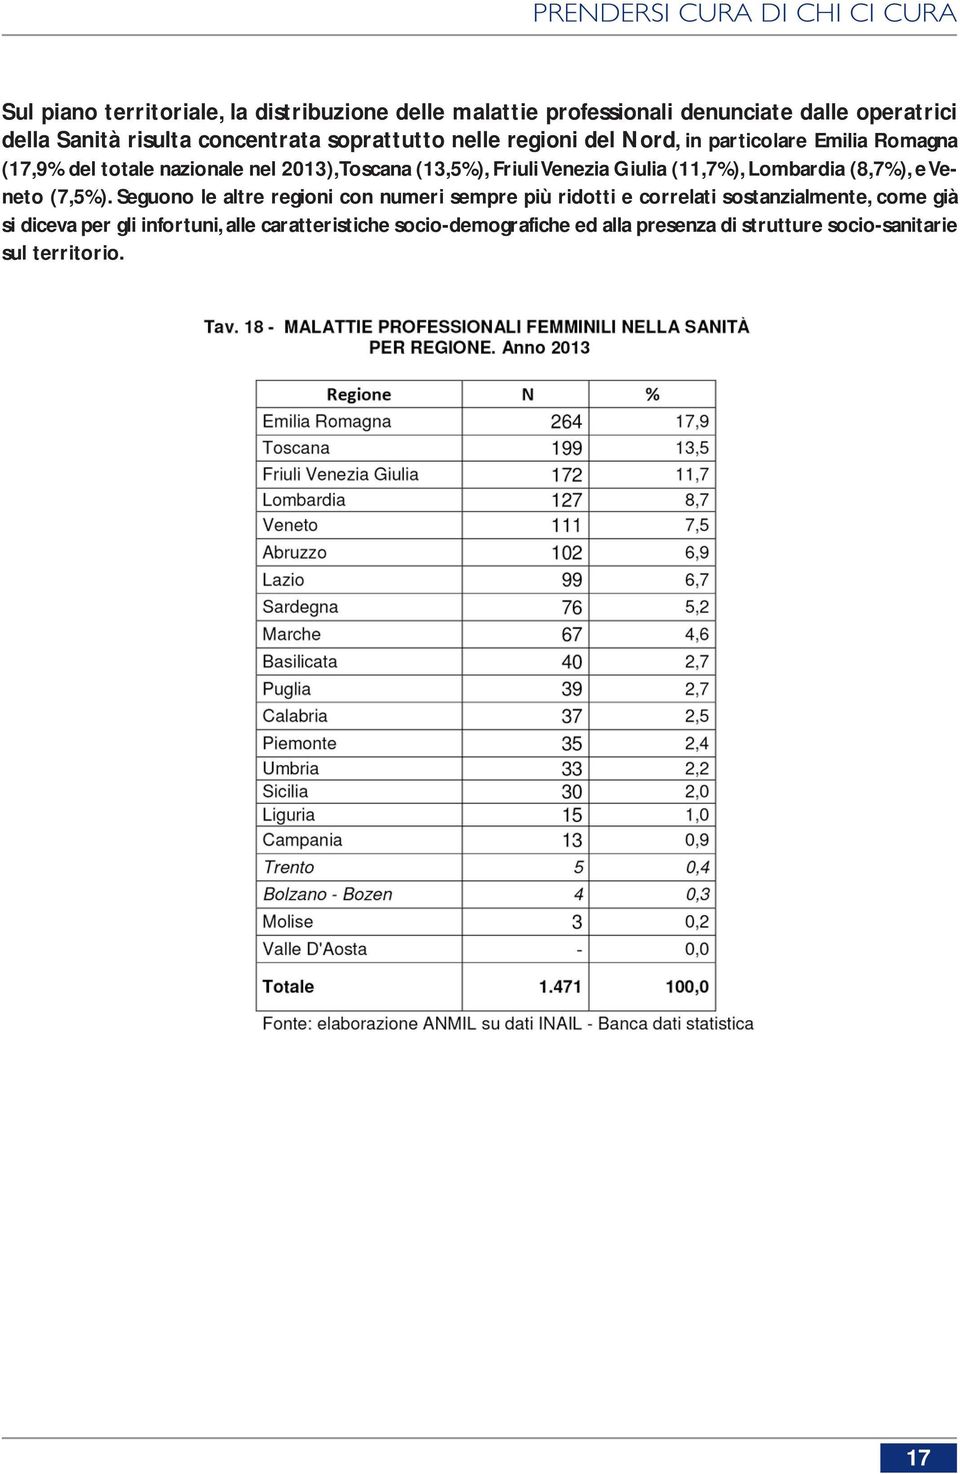 Friuli Venezia Giulia (11,7%), Lombardia (8,7%), e Veneto (7,5%).